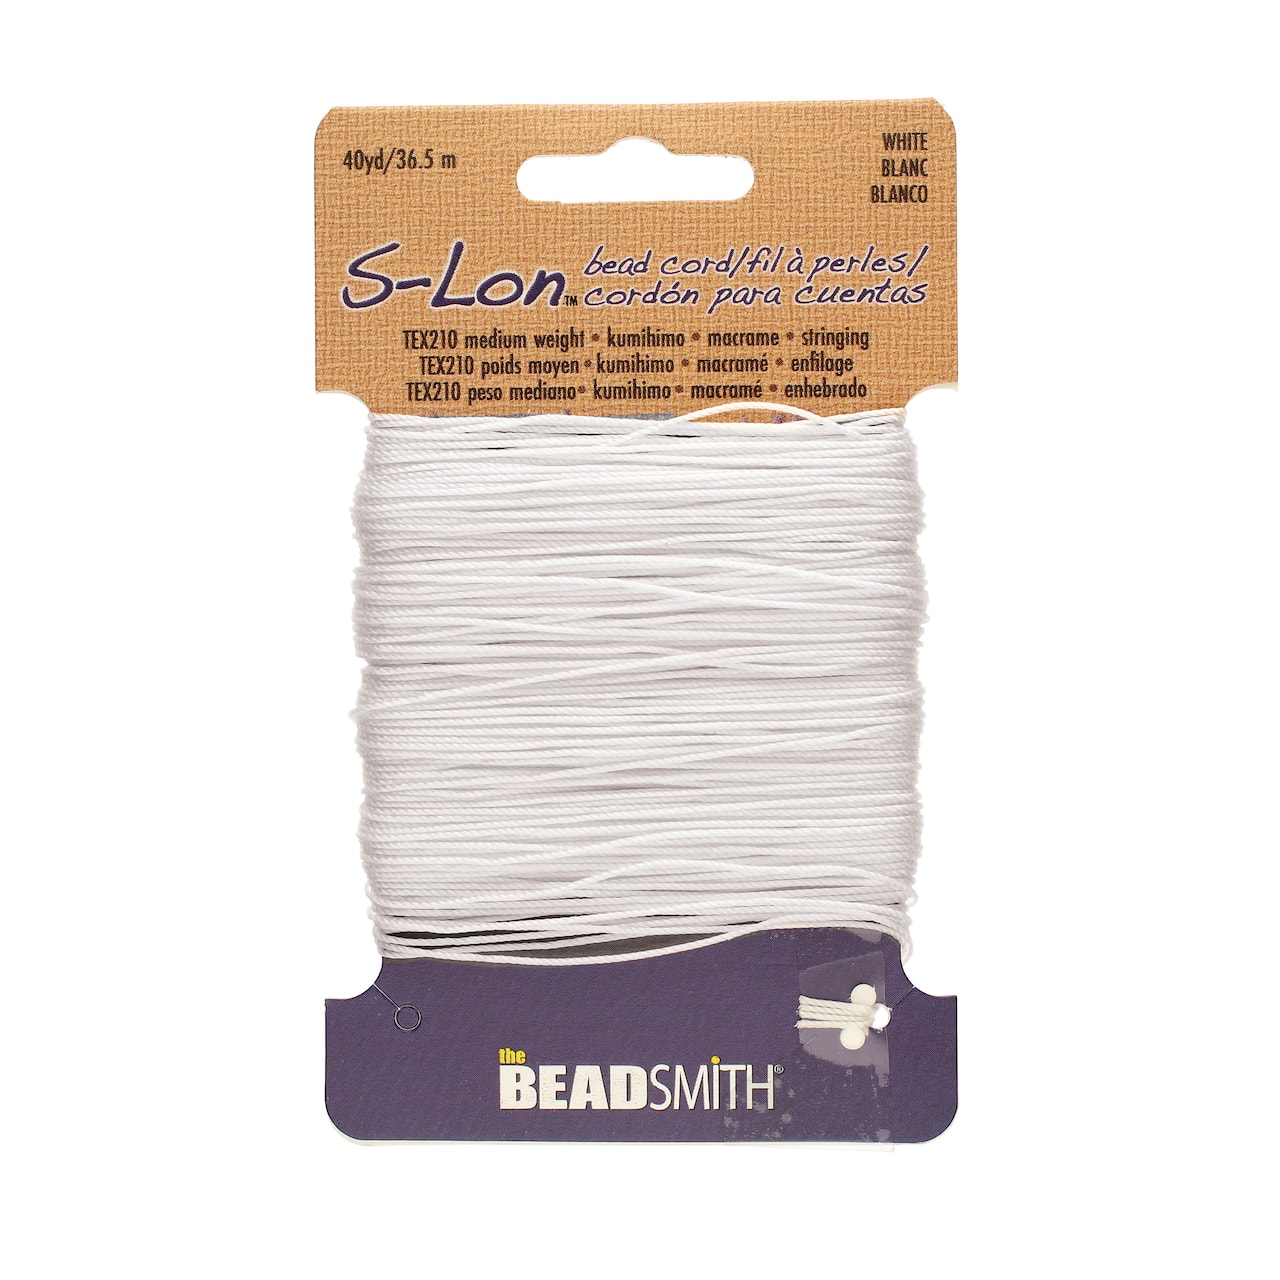 The Beadsmith&#xAE; S-Lon&#xAE; 0.5mm White Bead Cord